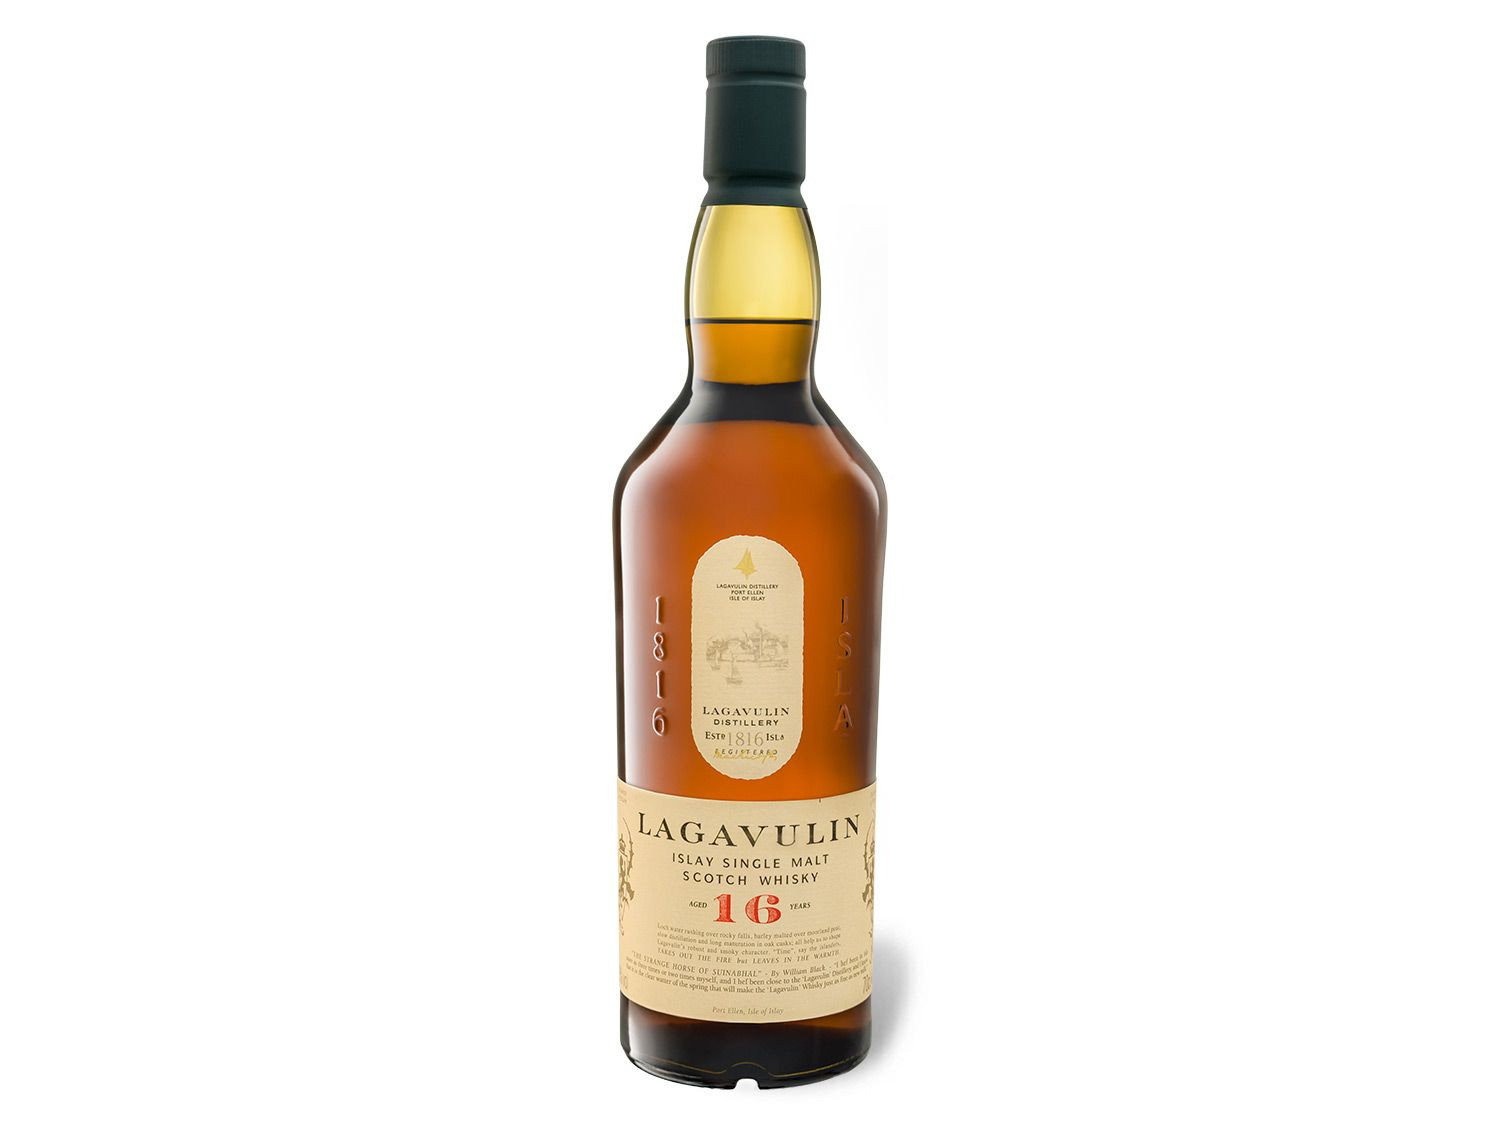 Lagavulin Islay Single mit… 16 Whisky Jahre Scotch Malt